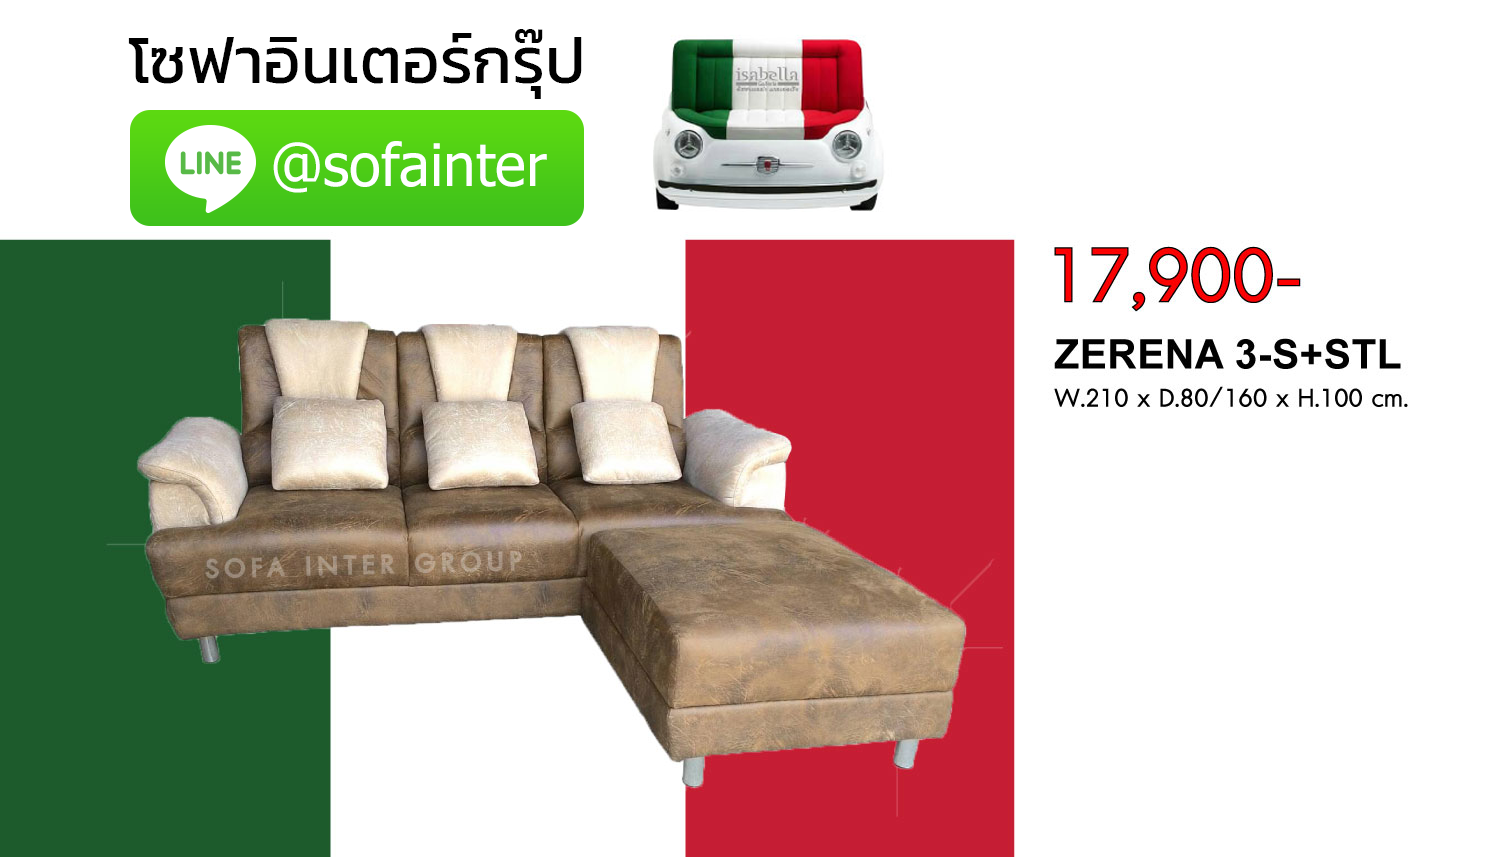 Sofa bed ZERENA(โซฟาหนัง PU ลายหนังช้าง) 3-S+STL